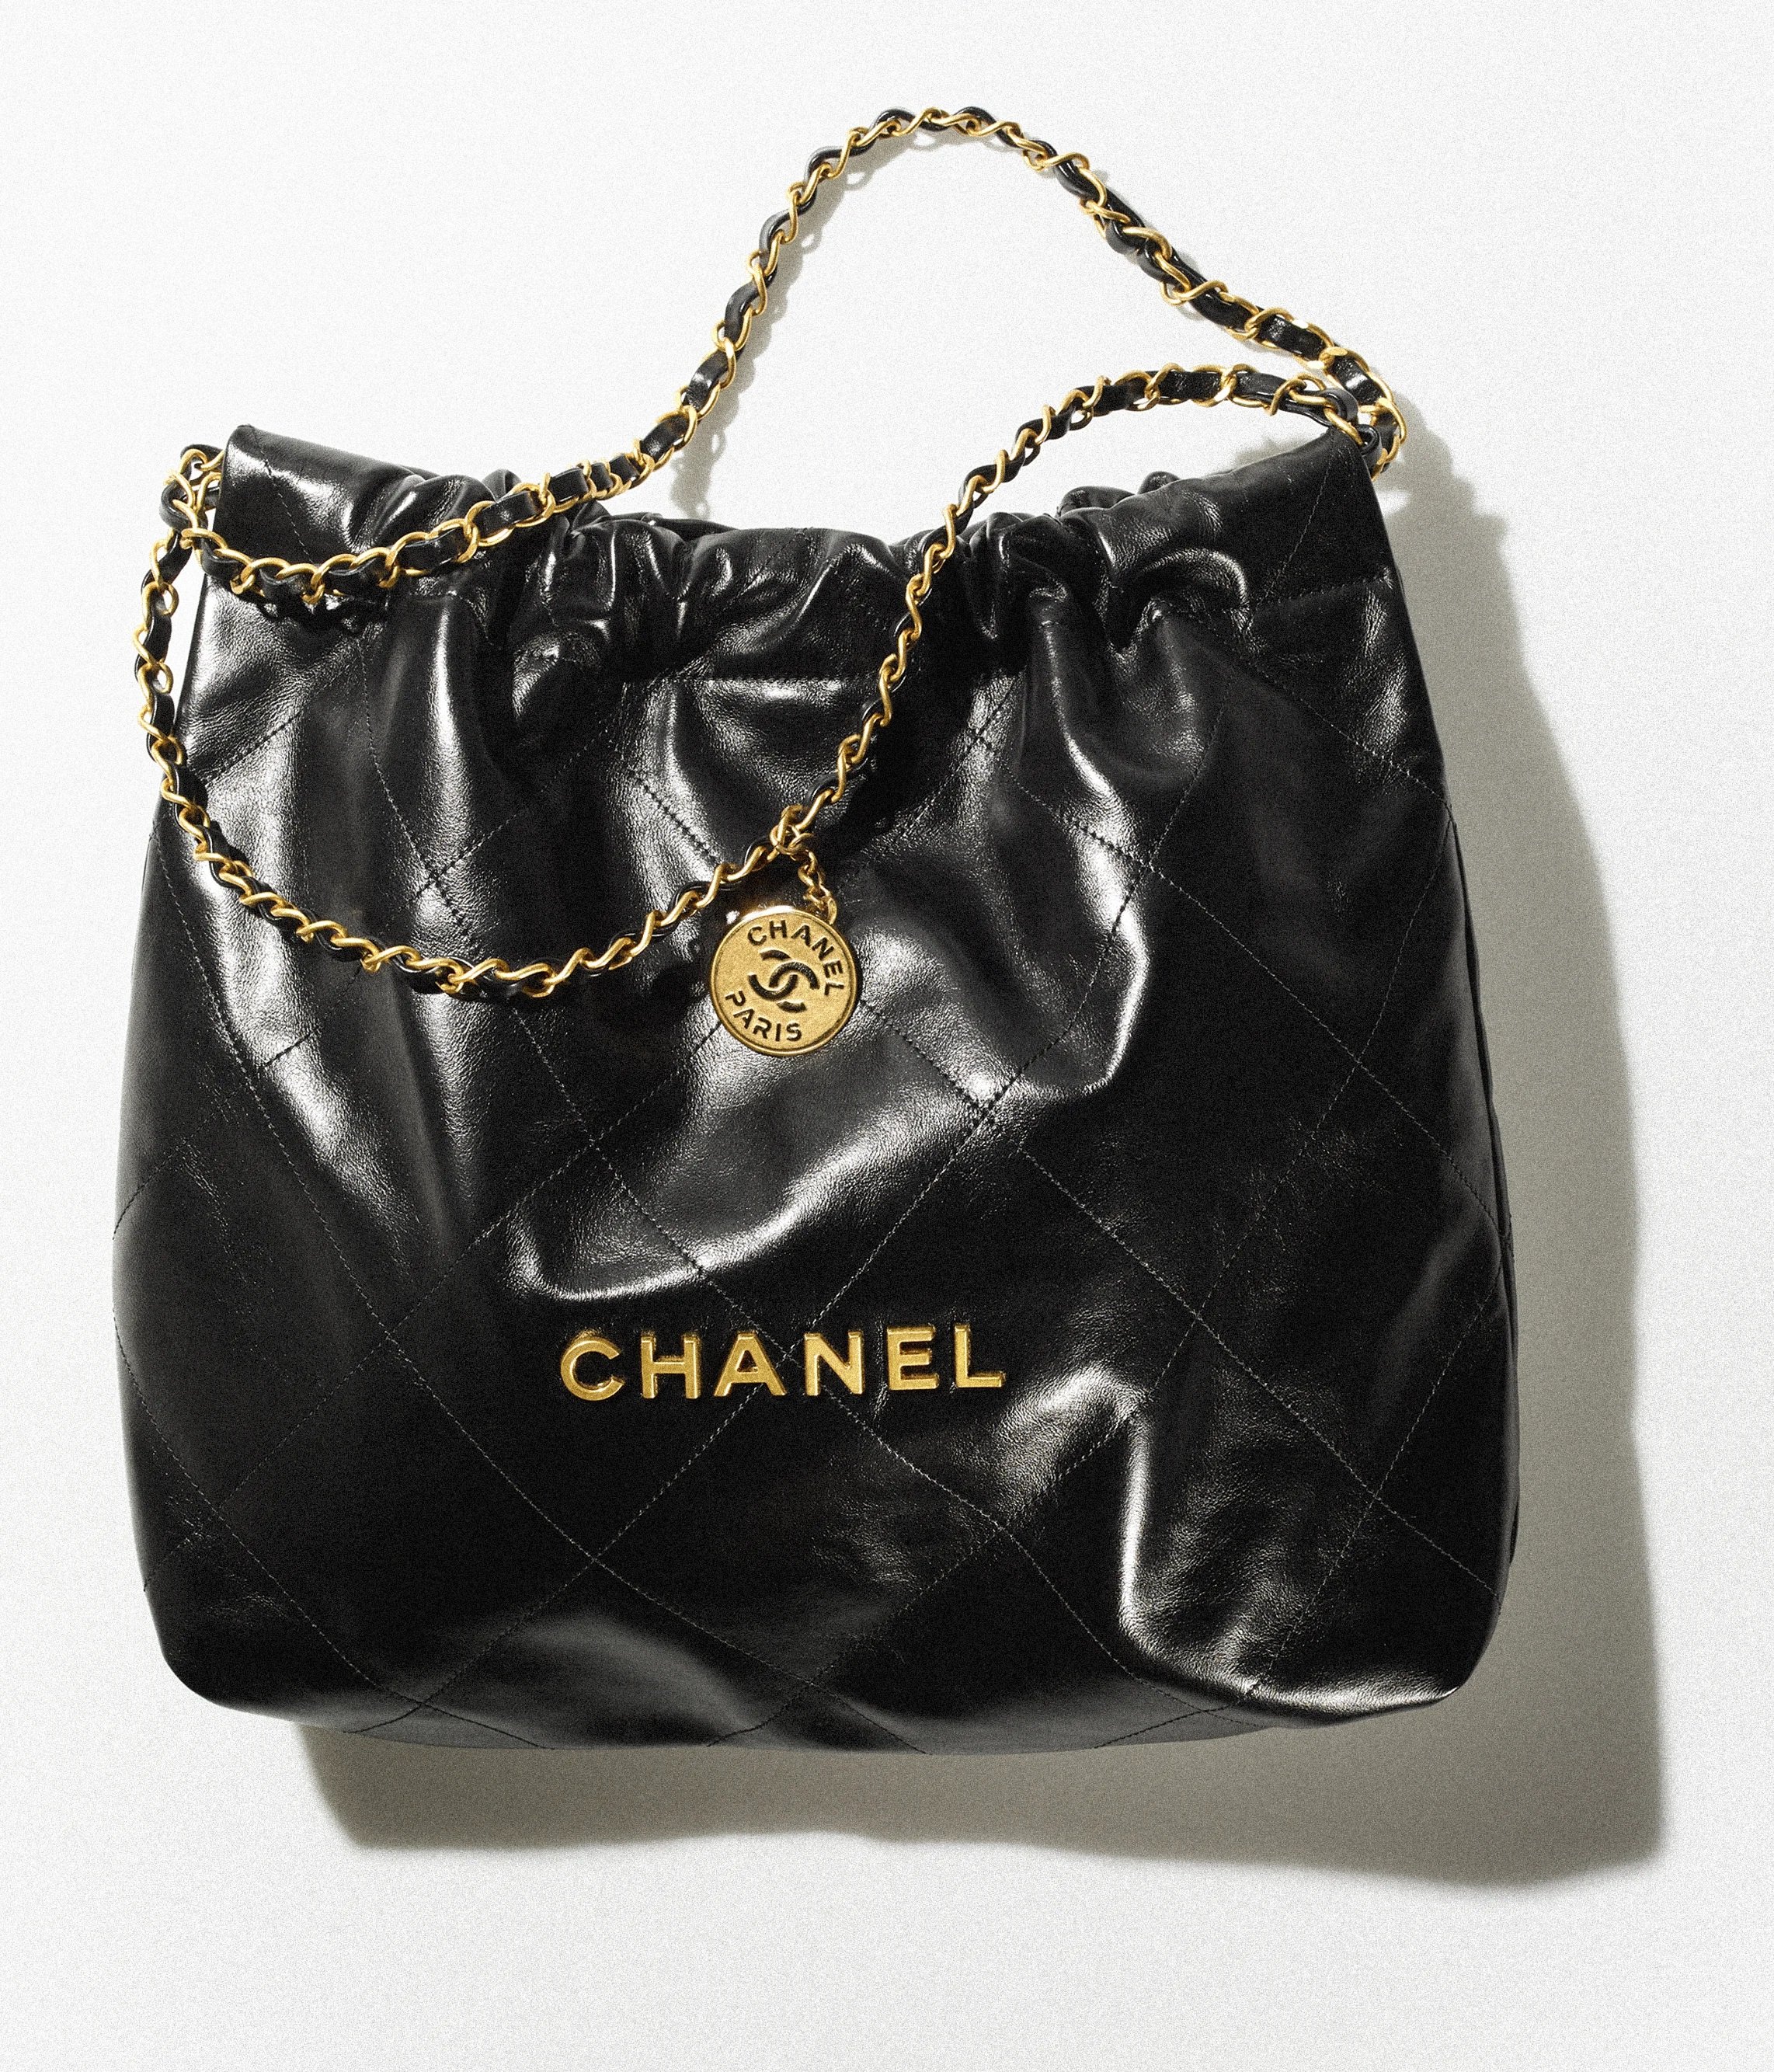 Chanel 22 Handbag in Black Shiny Calfskin & Gold-Tone Metal.jpg